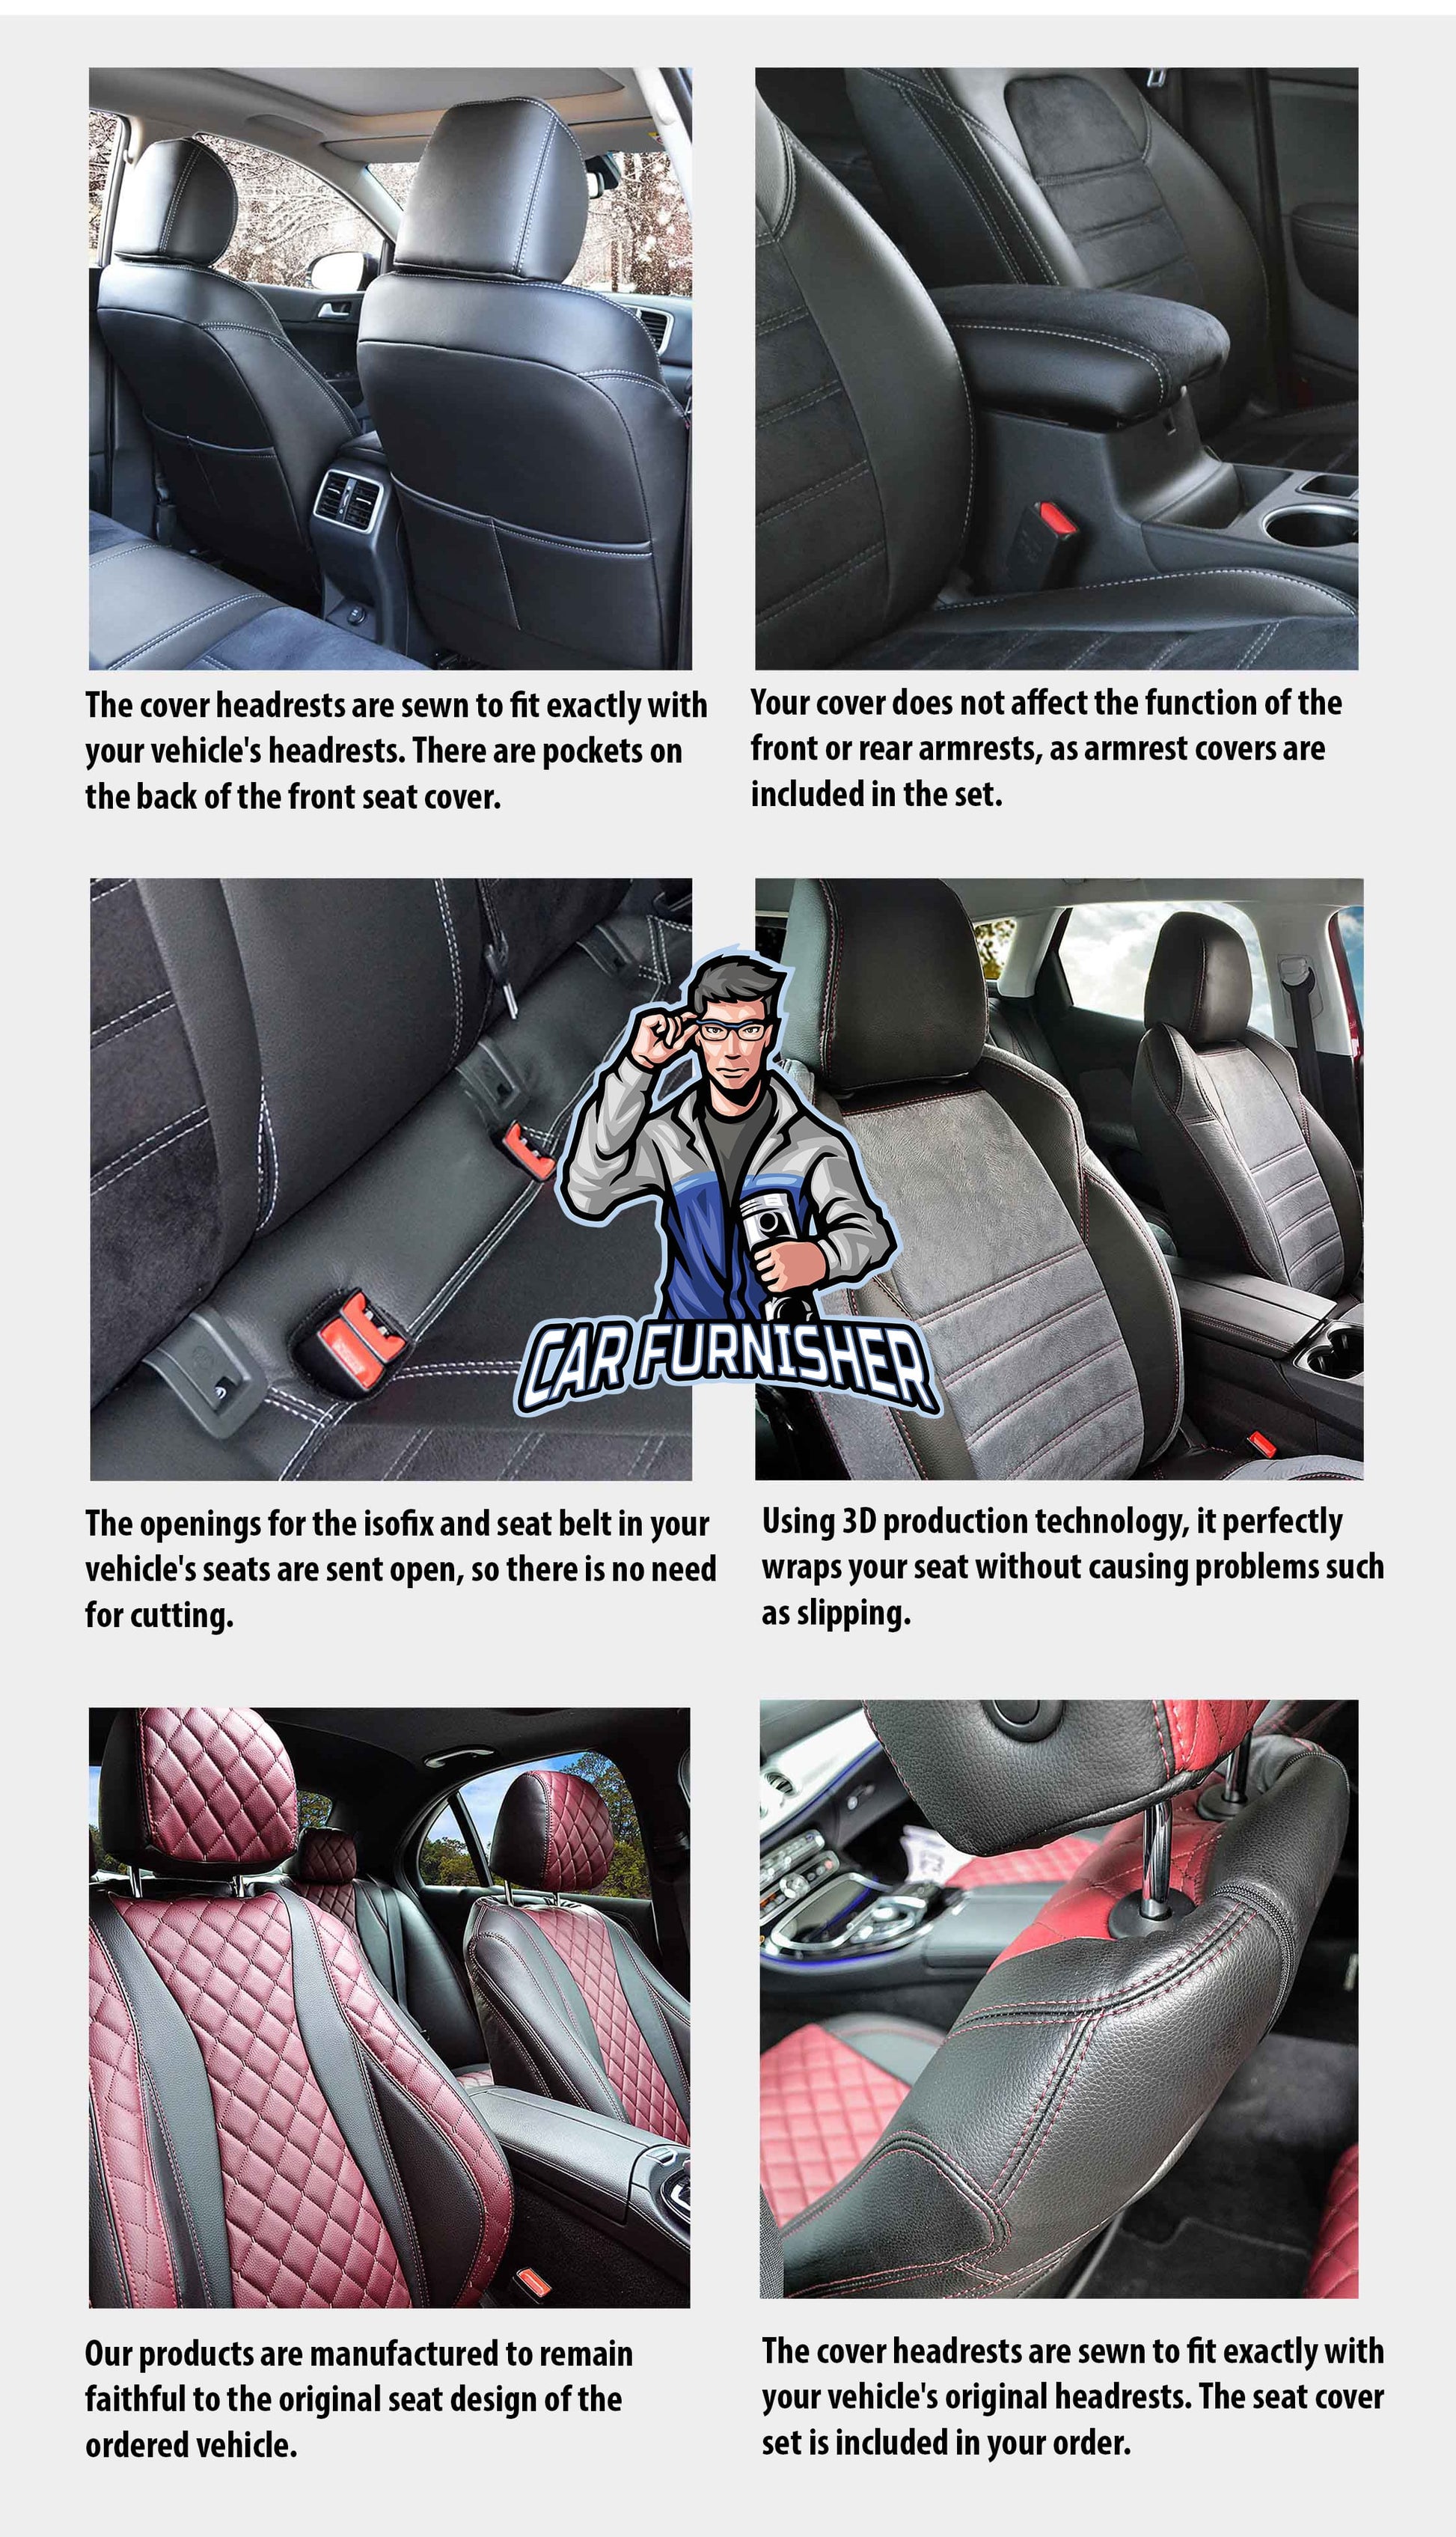 Daihatsu Terios Seat Covers Original Jacquard Design Light Gray Jacquard Fabric